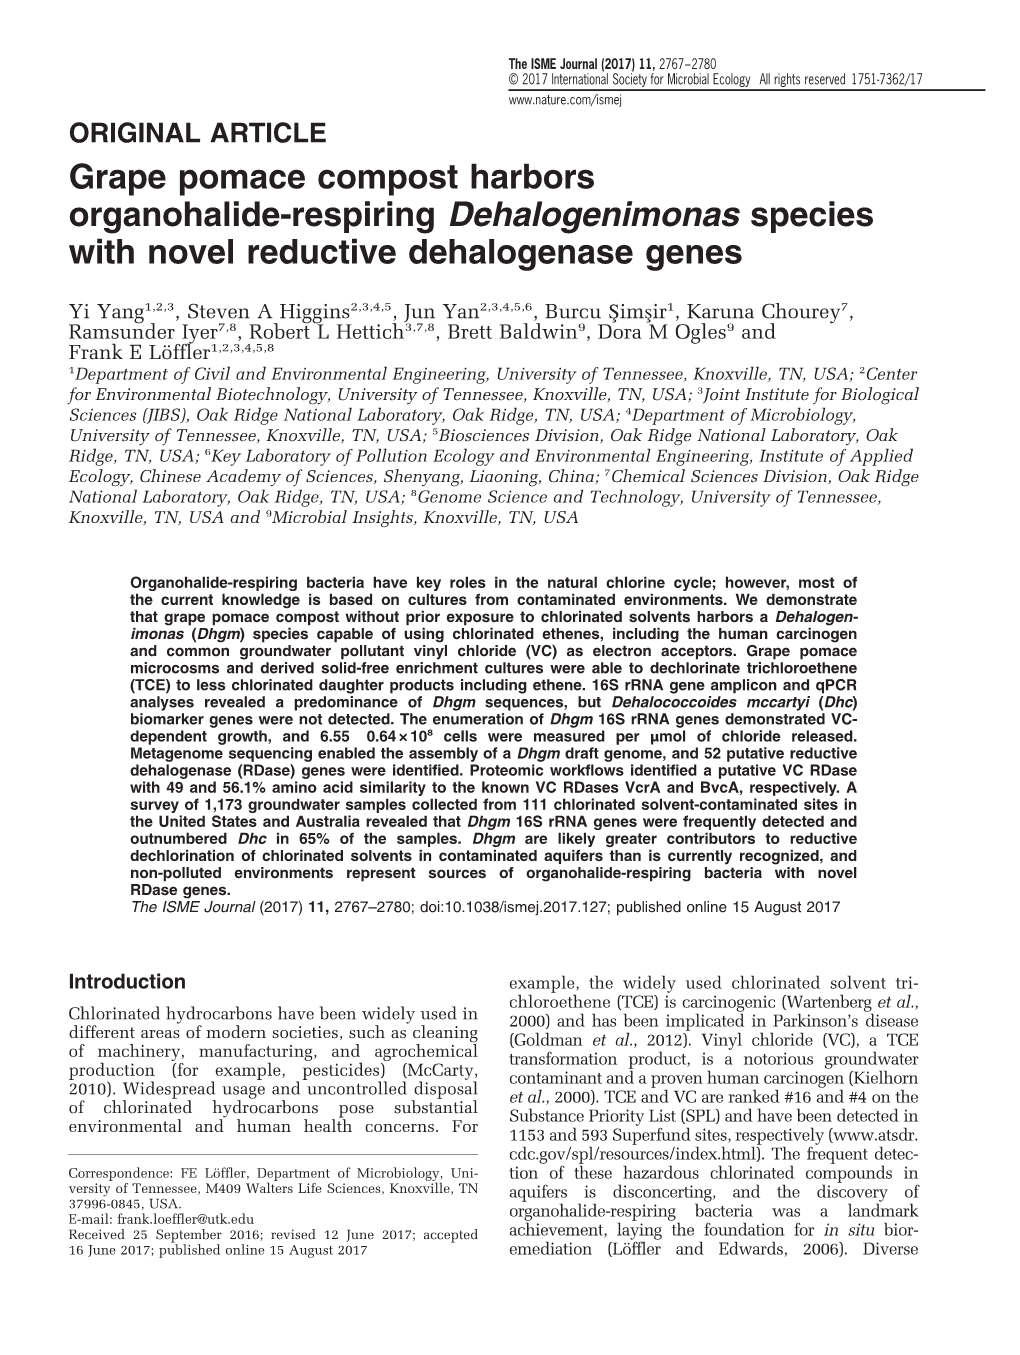 Grape Pomace Compost Harbors Organohalide-Respiring Dehalogenimonas Species with Novel Reductive Dehalogenase Genes